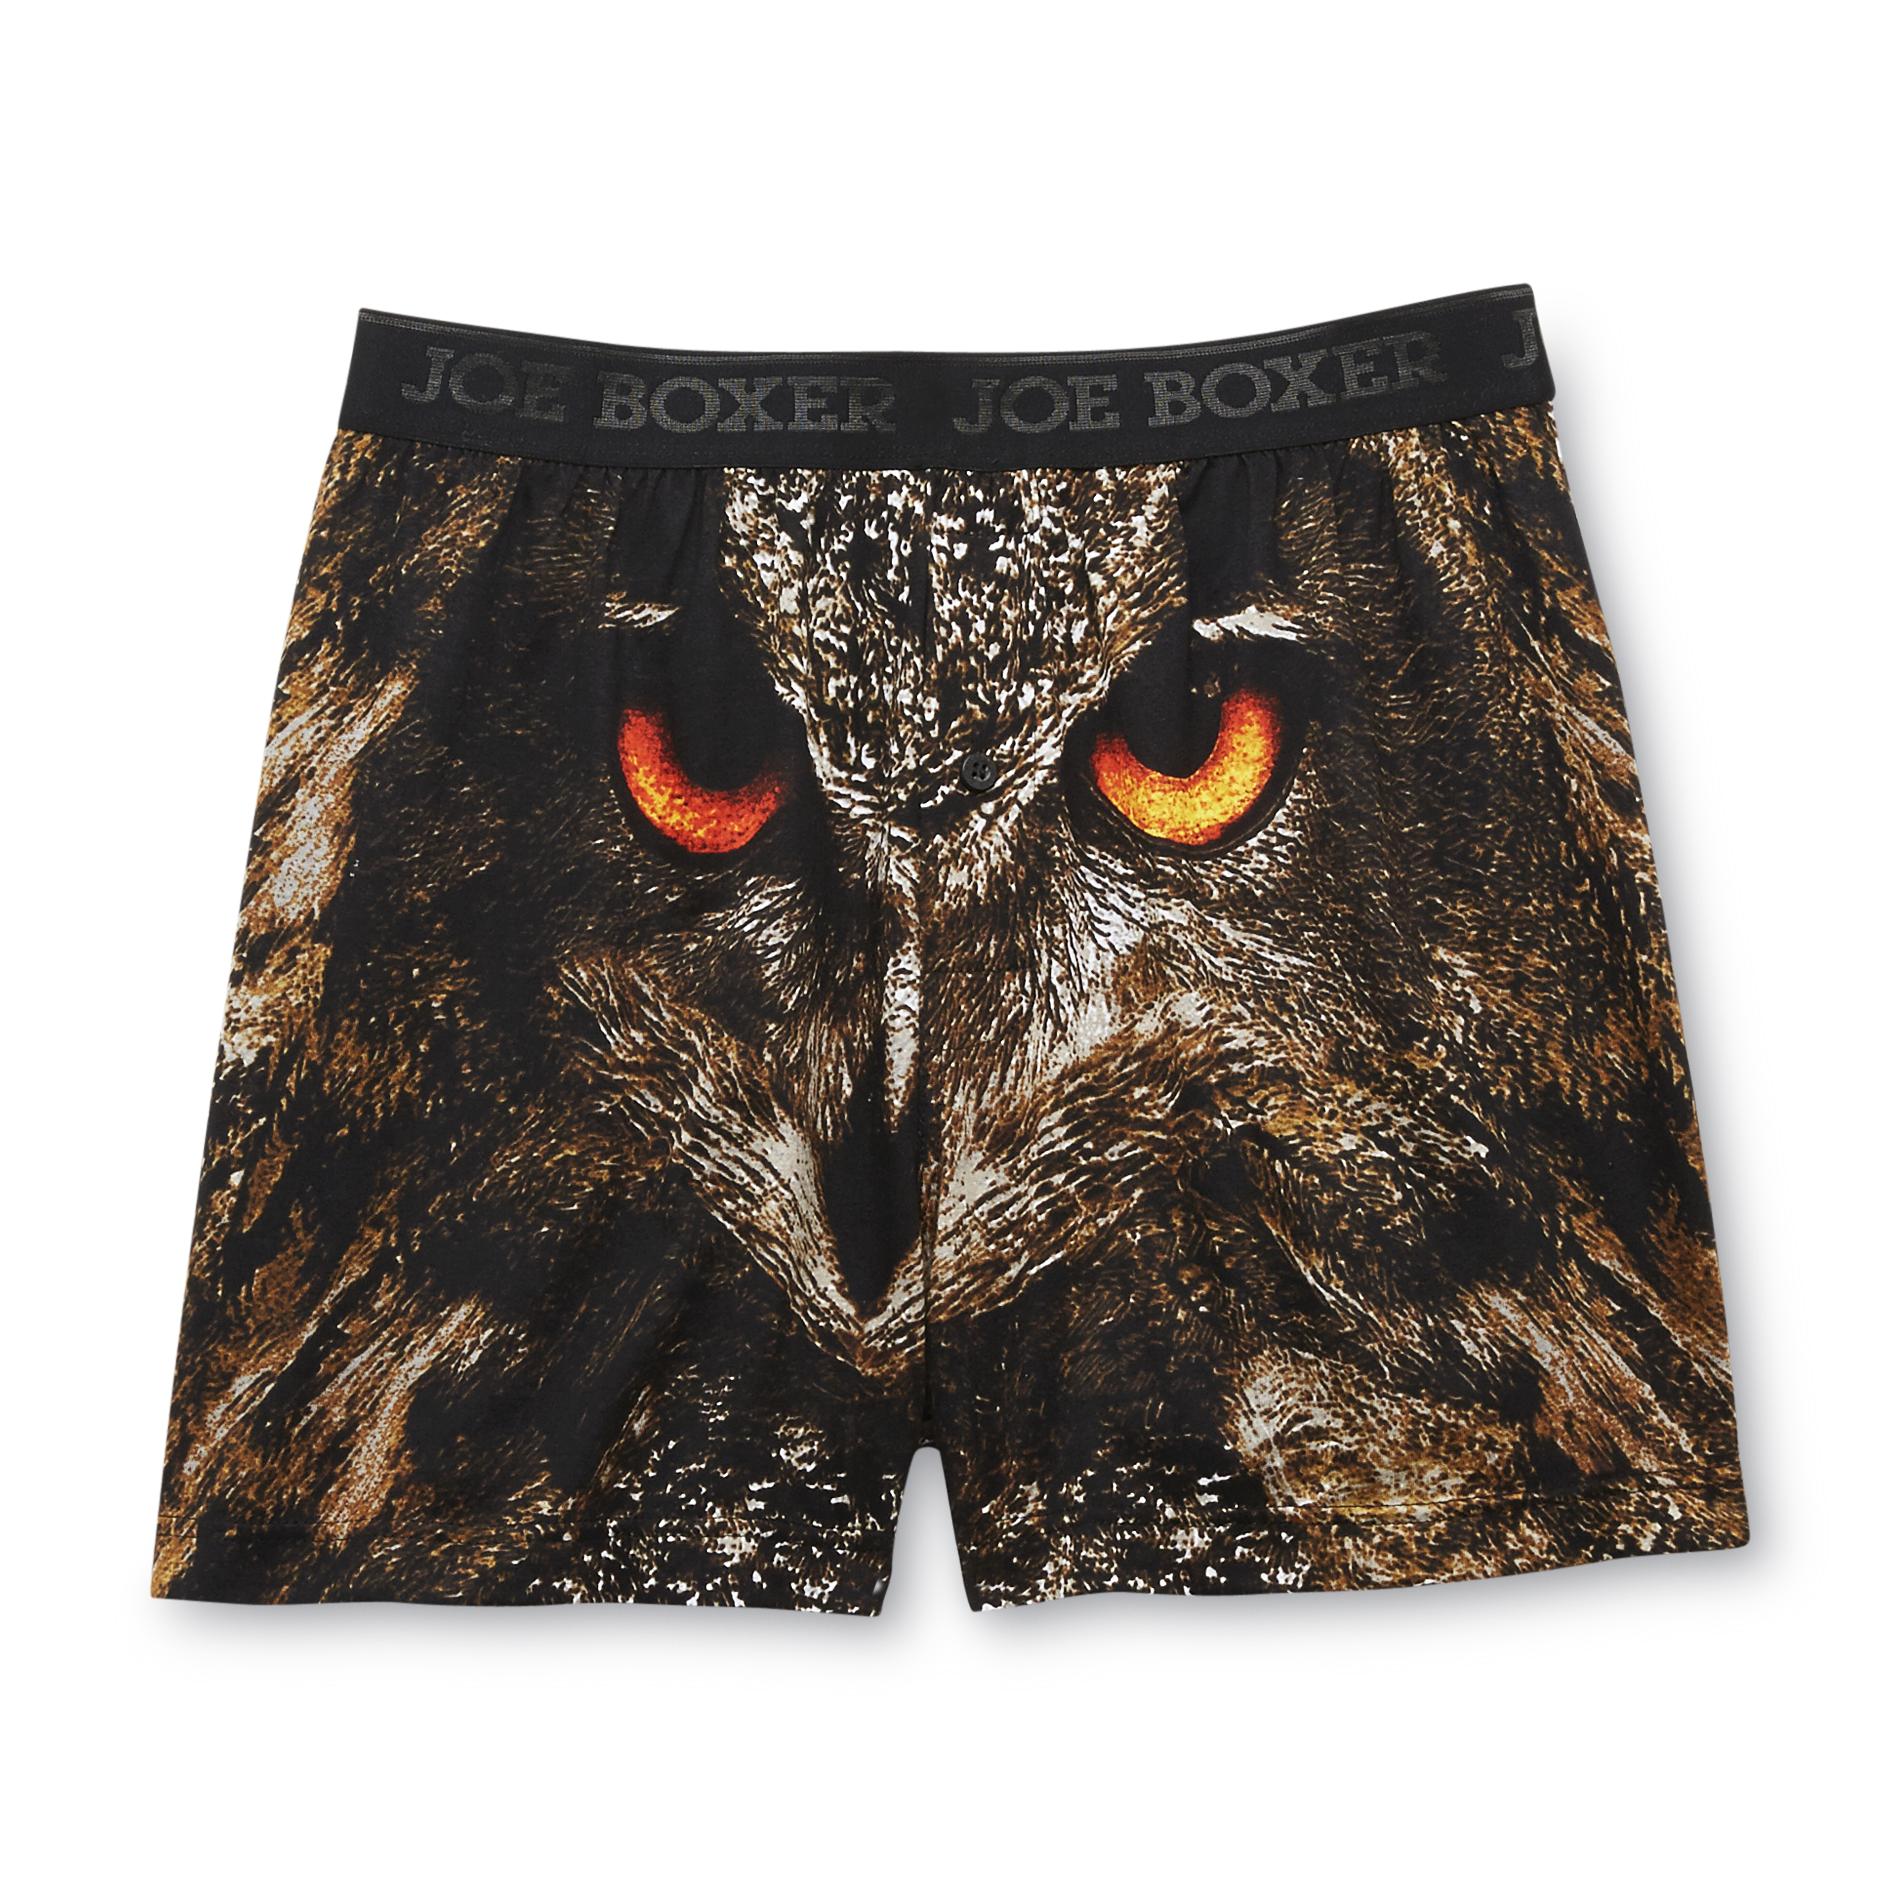 Joe Boxer Men's Boxer Shorts - Owl